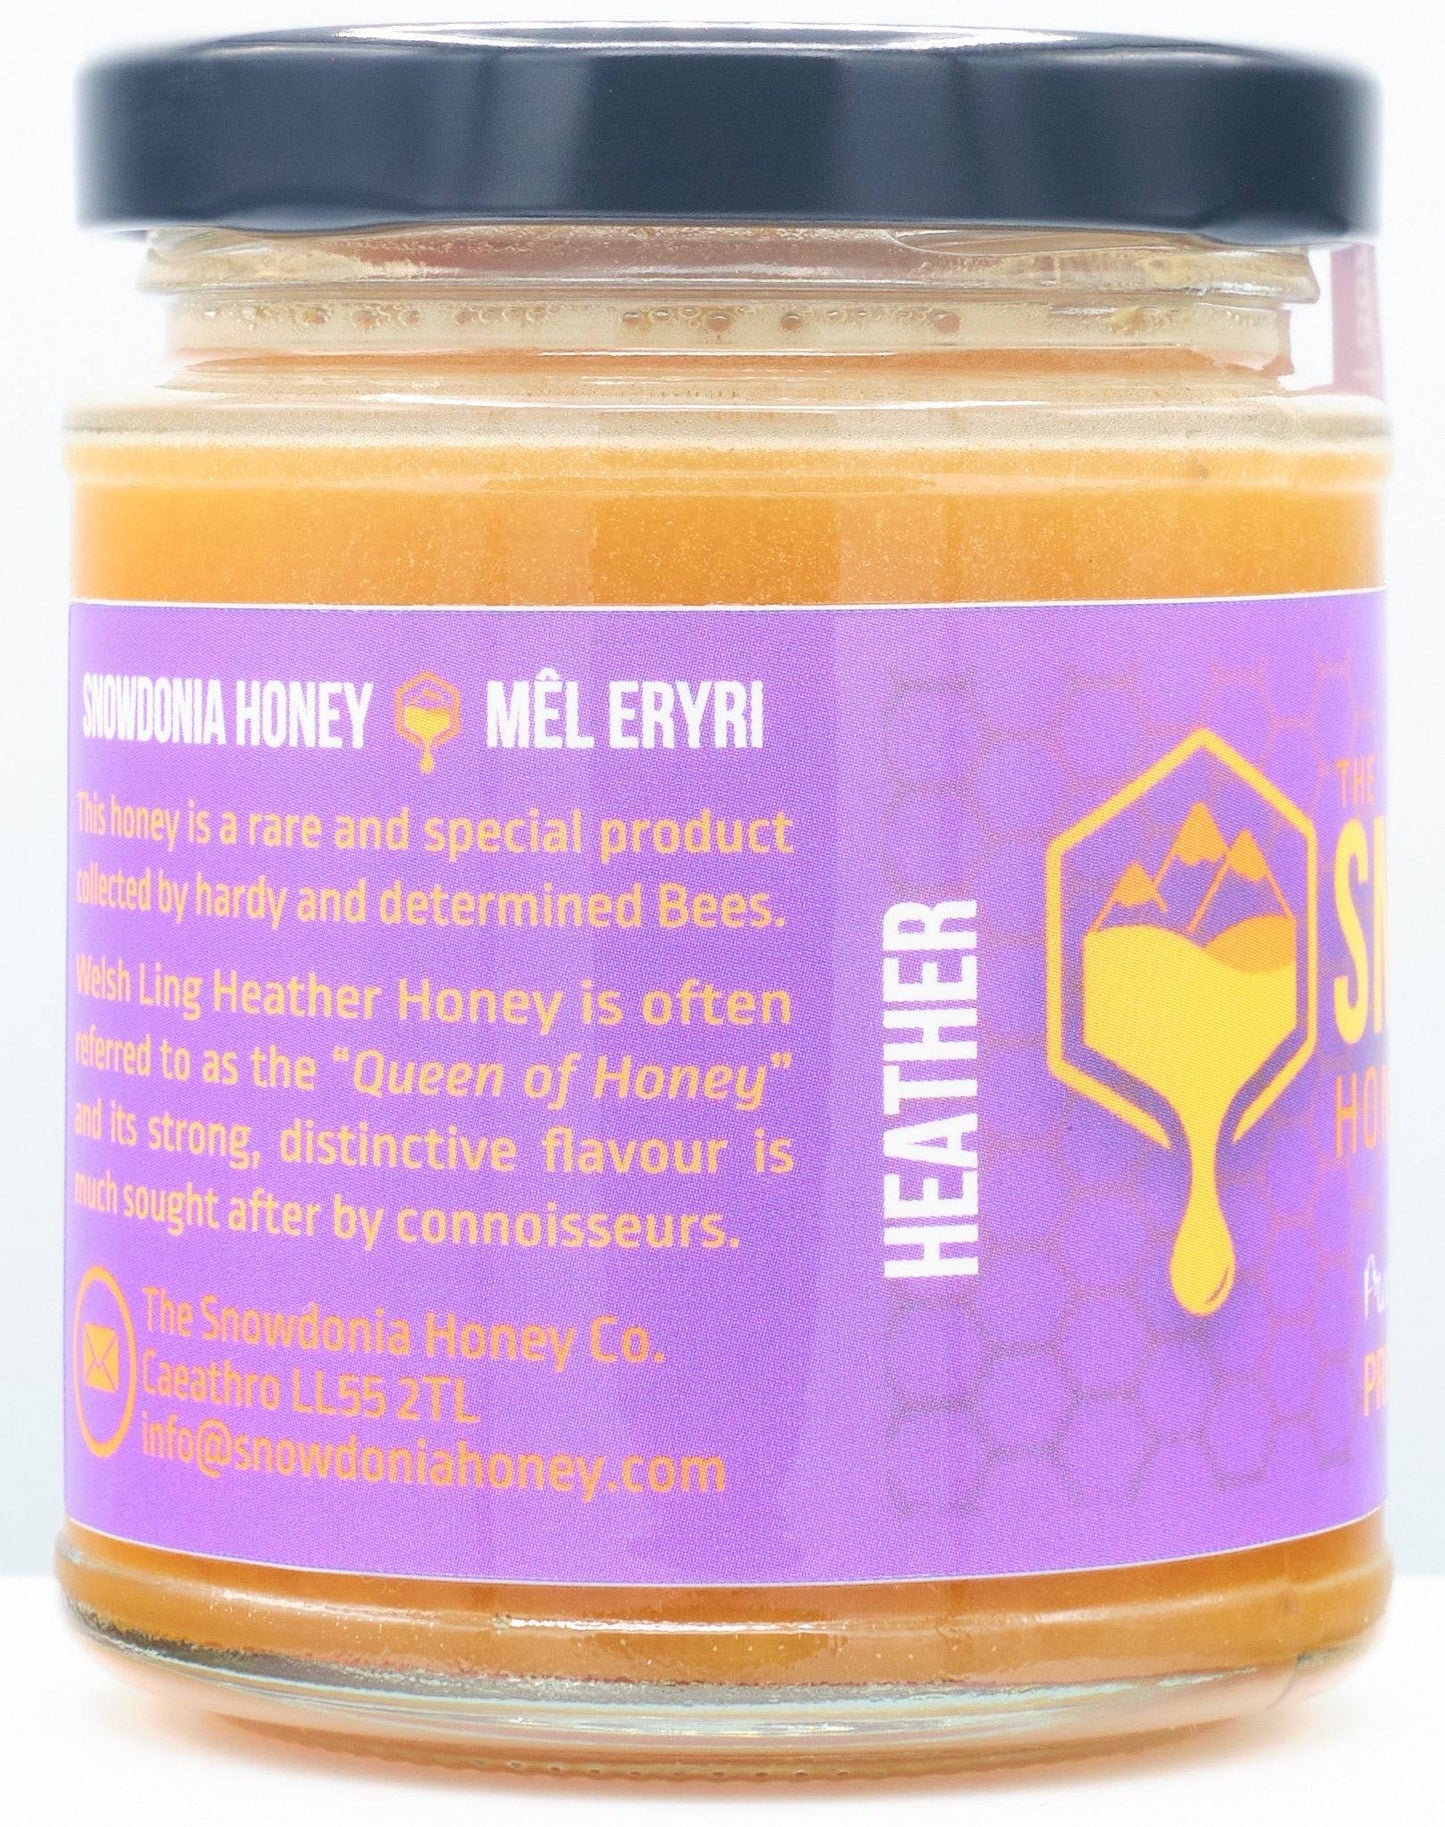 Snowdonia Heather Welsh Honey 227g - The Snowdonia Honey Co.